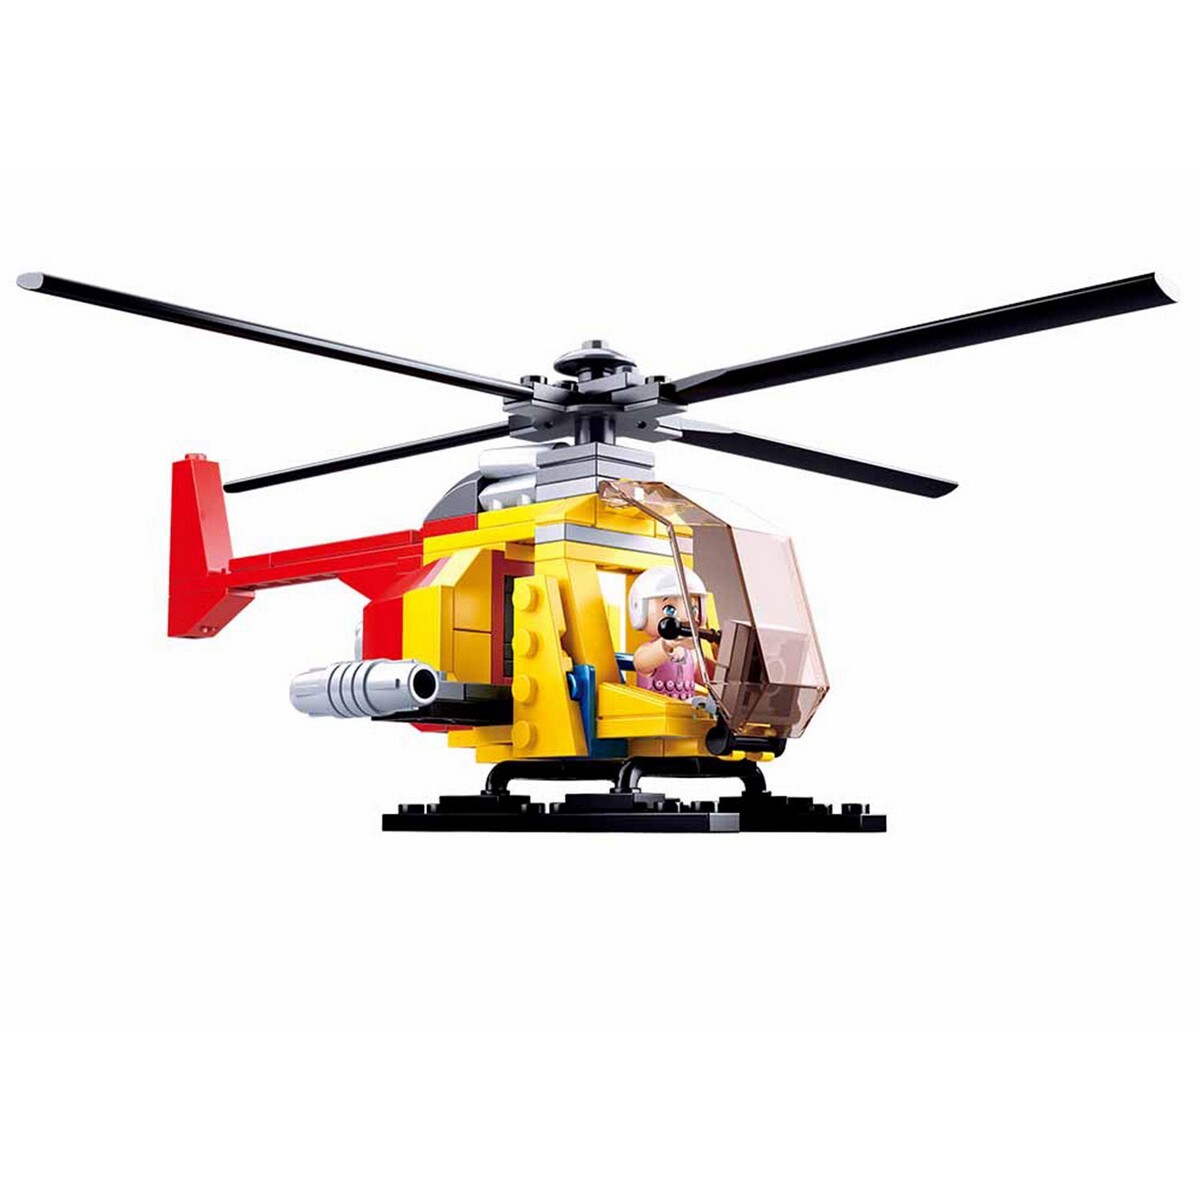 Trucare Sluban Helicopter-B0667A